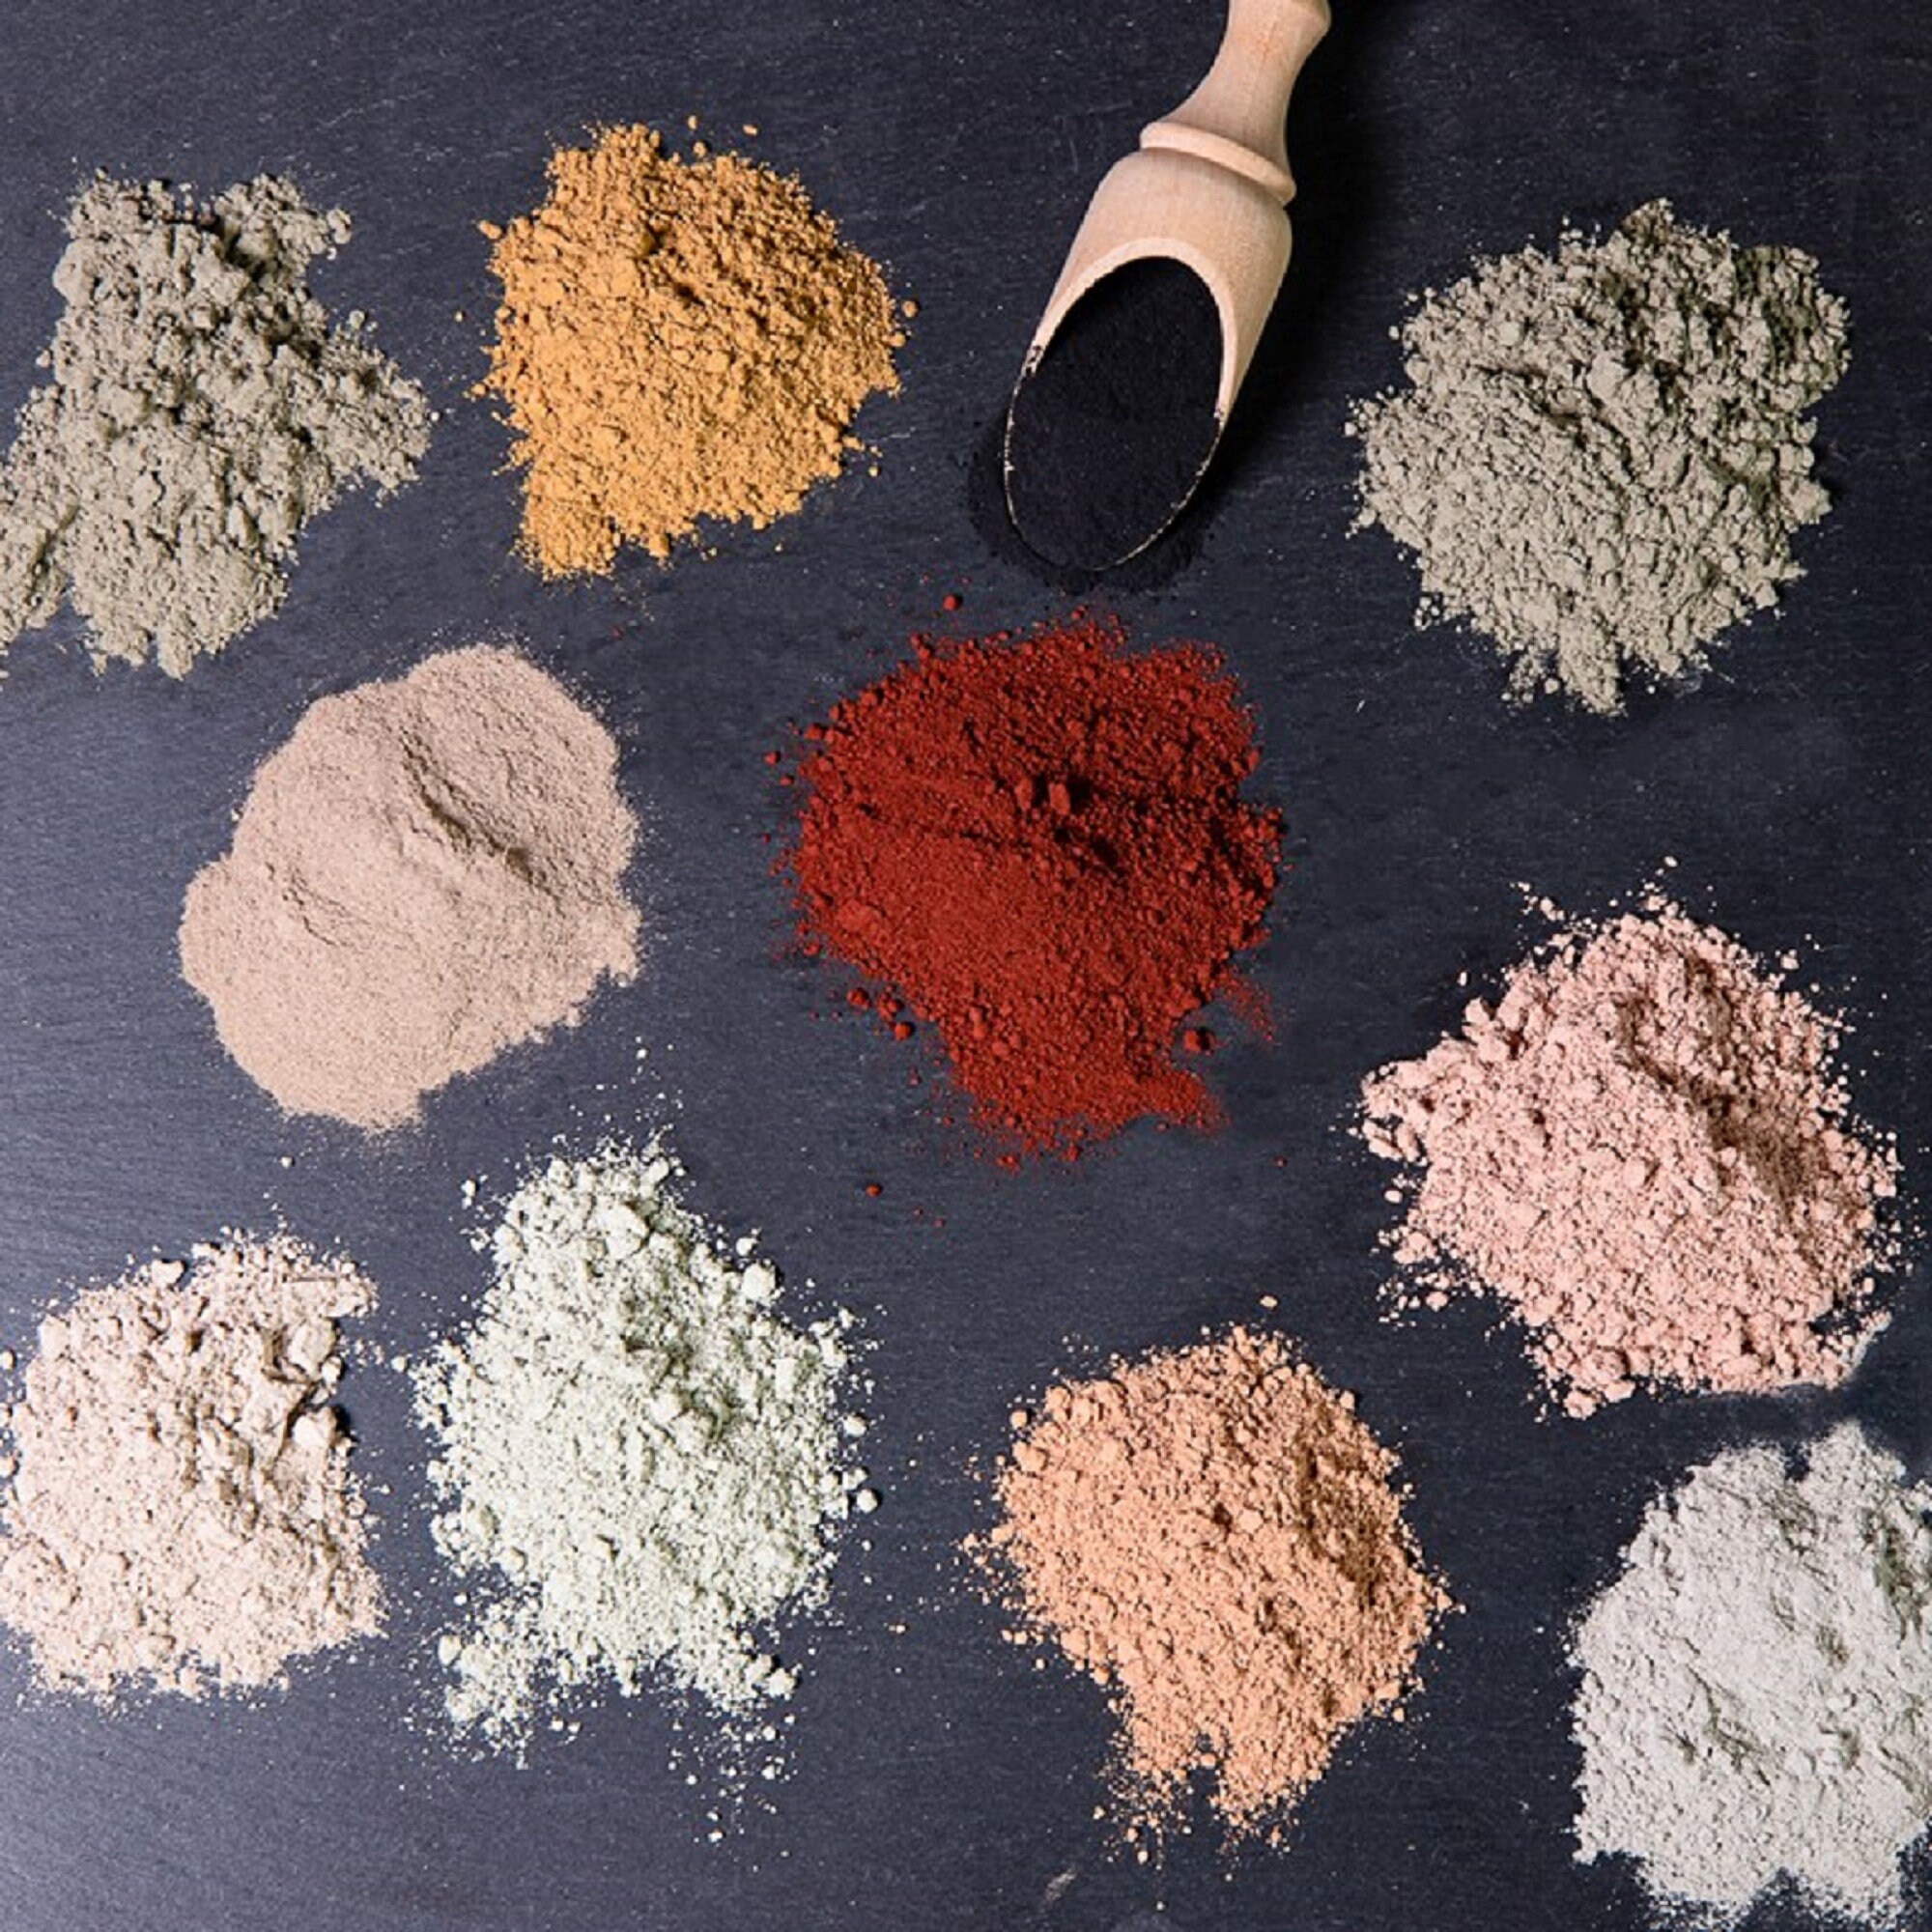 Soapeauty White Kaolin Clay Powder | Cosmetic Grade 100% Natural | Facials, Face Mask, Soap Making, Bath Bomb | AKA White Clay Powder, China Clay